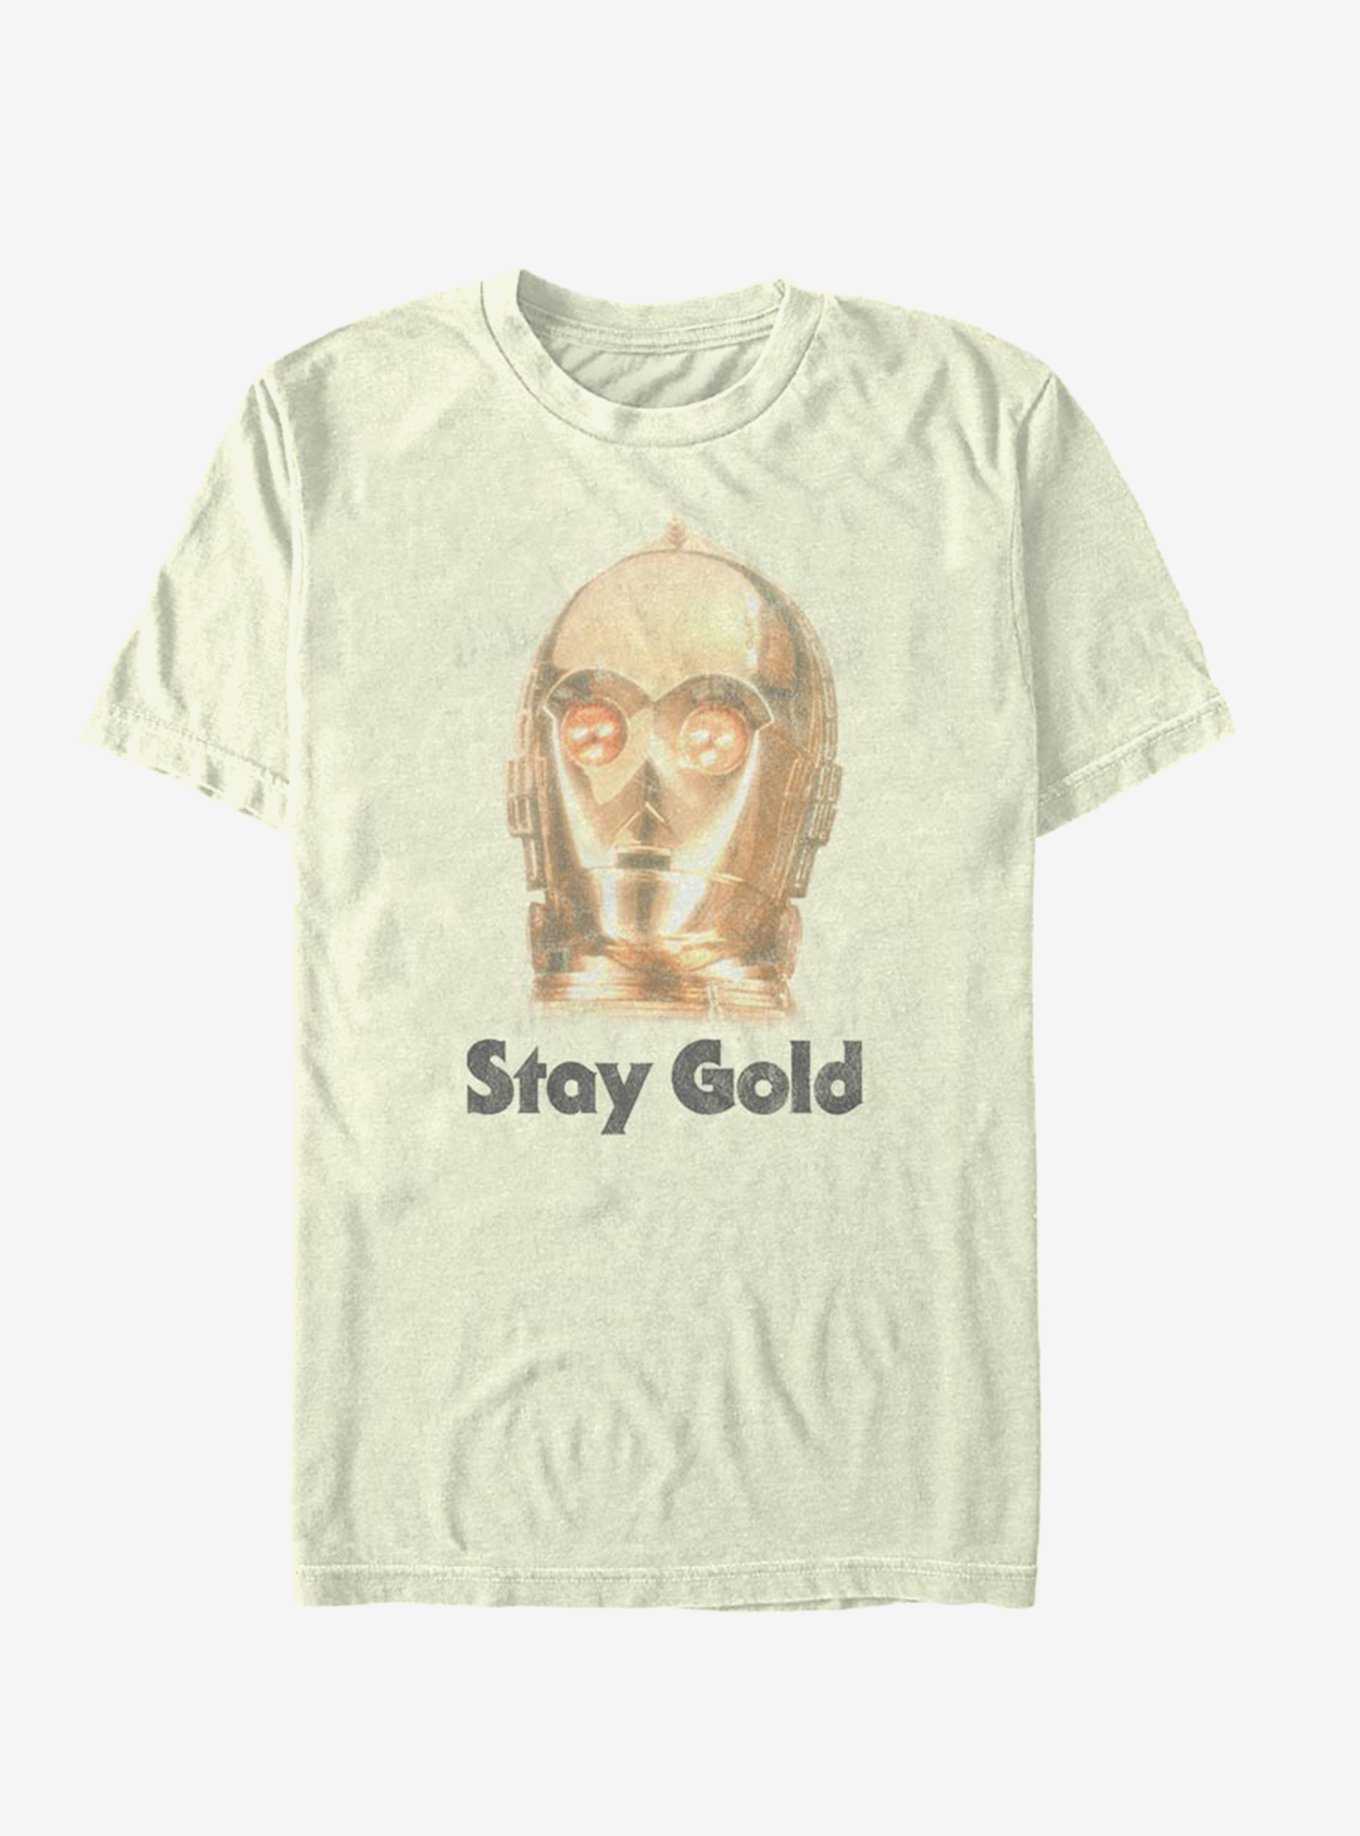 Star Wars Episode IX The Rise Of Skywalker Stay Gold T-Shirt, , hi-res